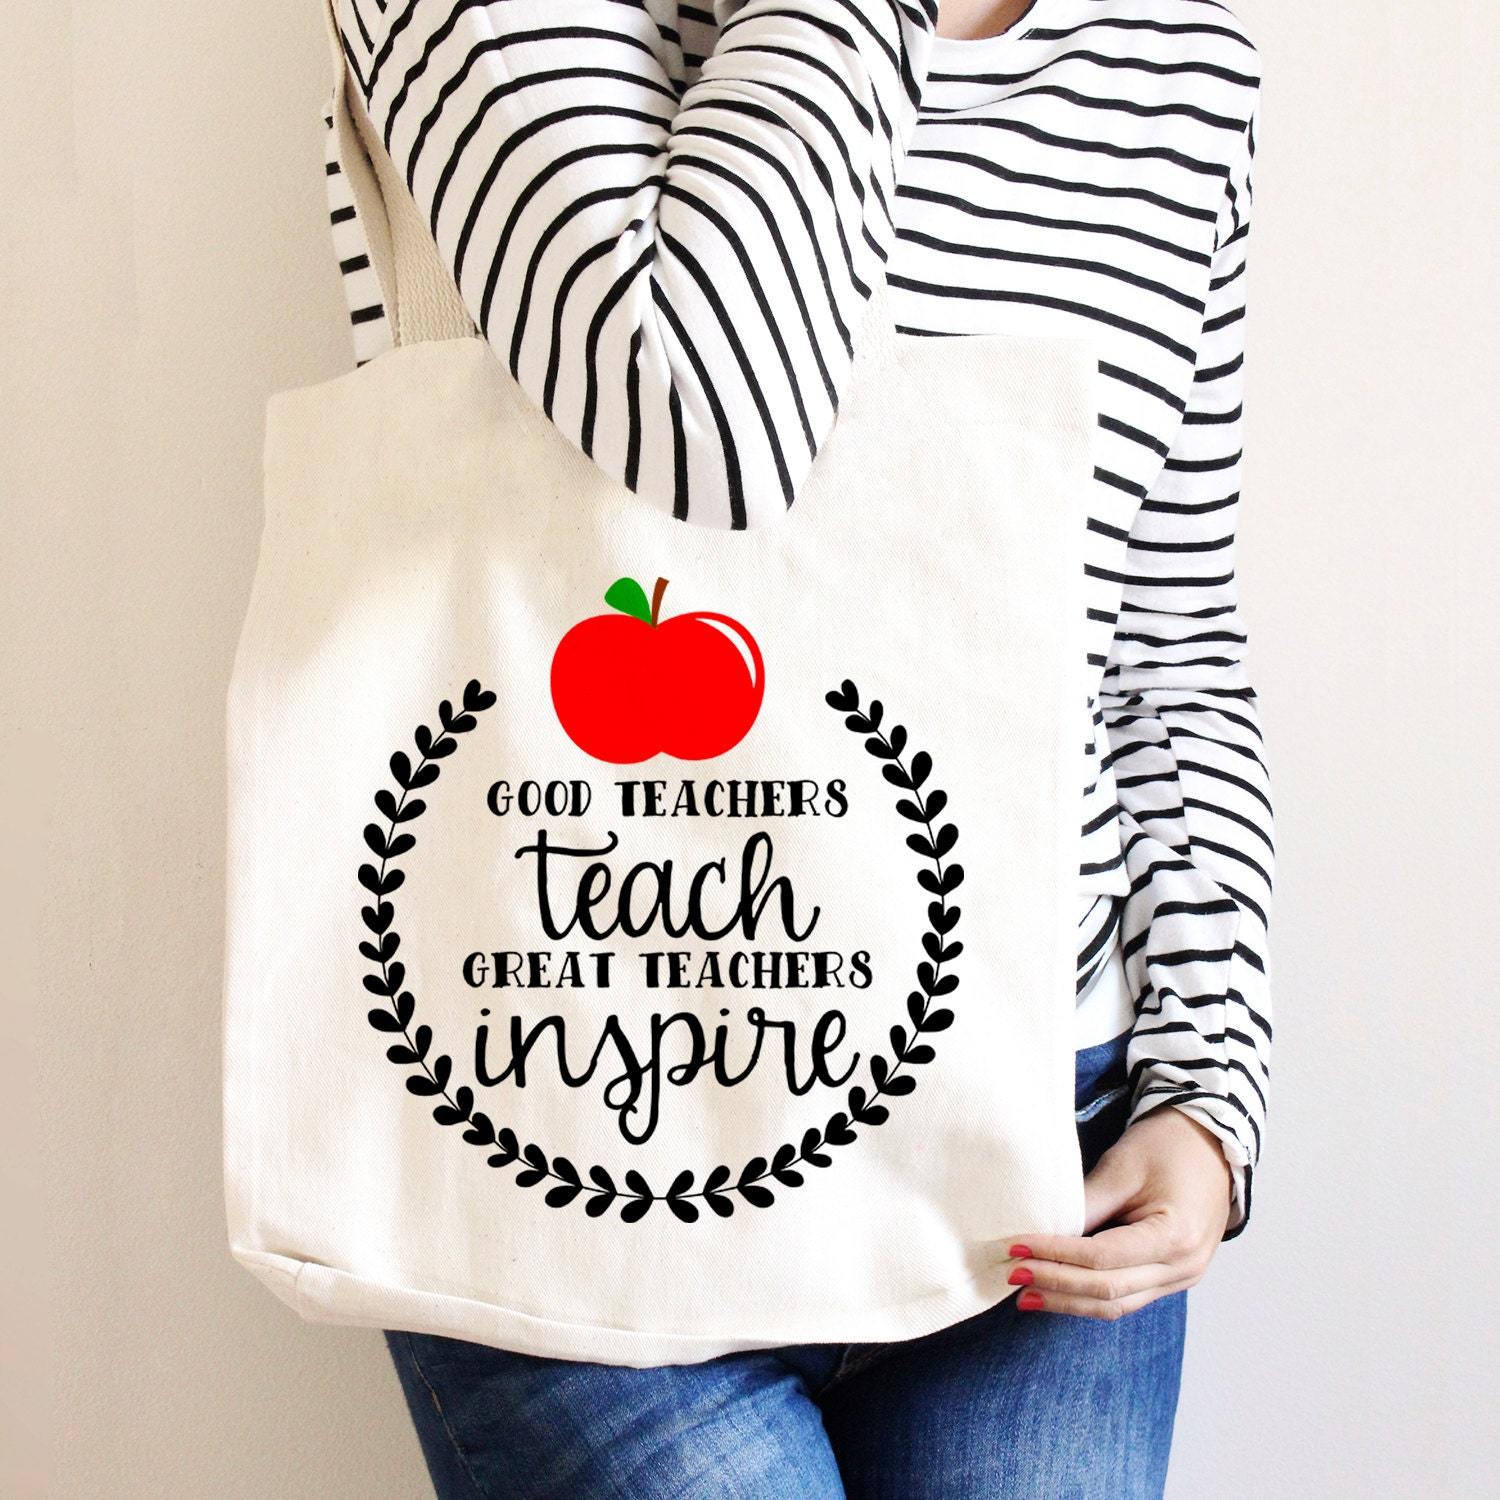 Personalized Teacher Canvas Tote Bag, Teacher Name Bag, Canvas Tote Bag  Gifts, Custom Teacher Gifts, Gifts for Teacher, Thank You Teacher Gifts